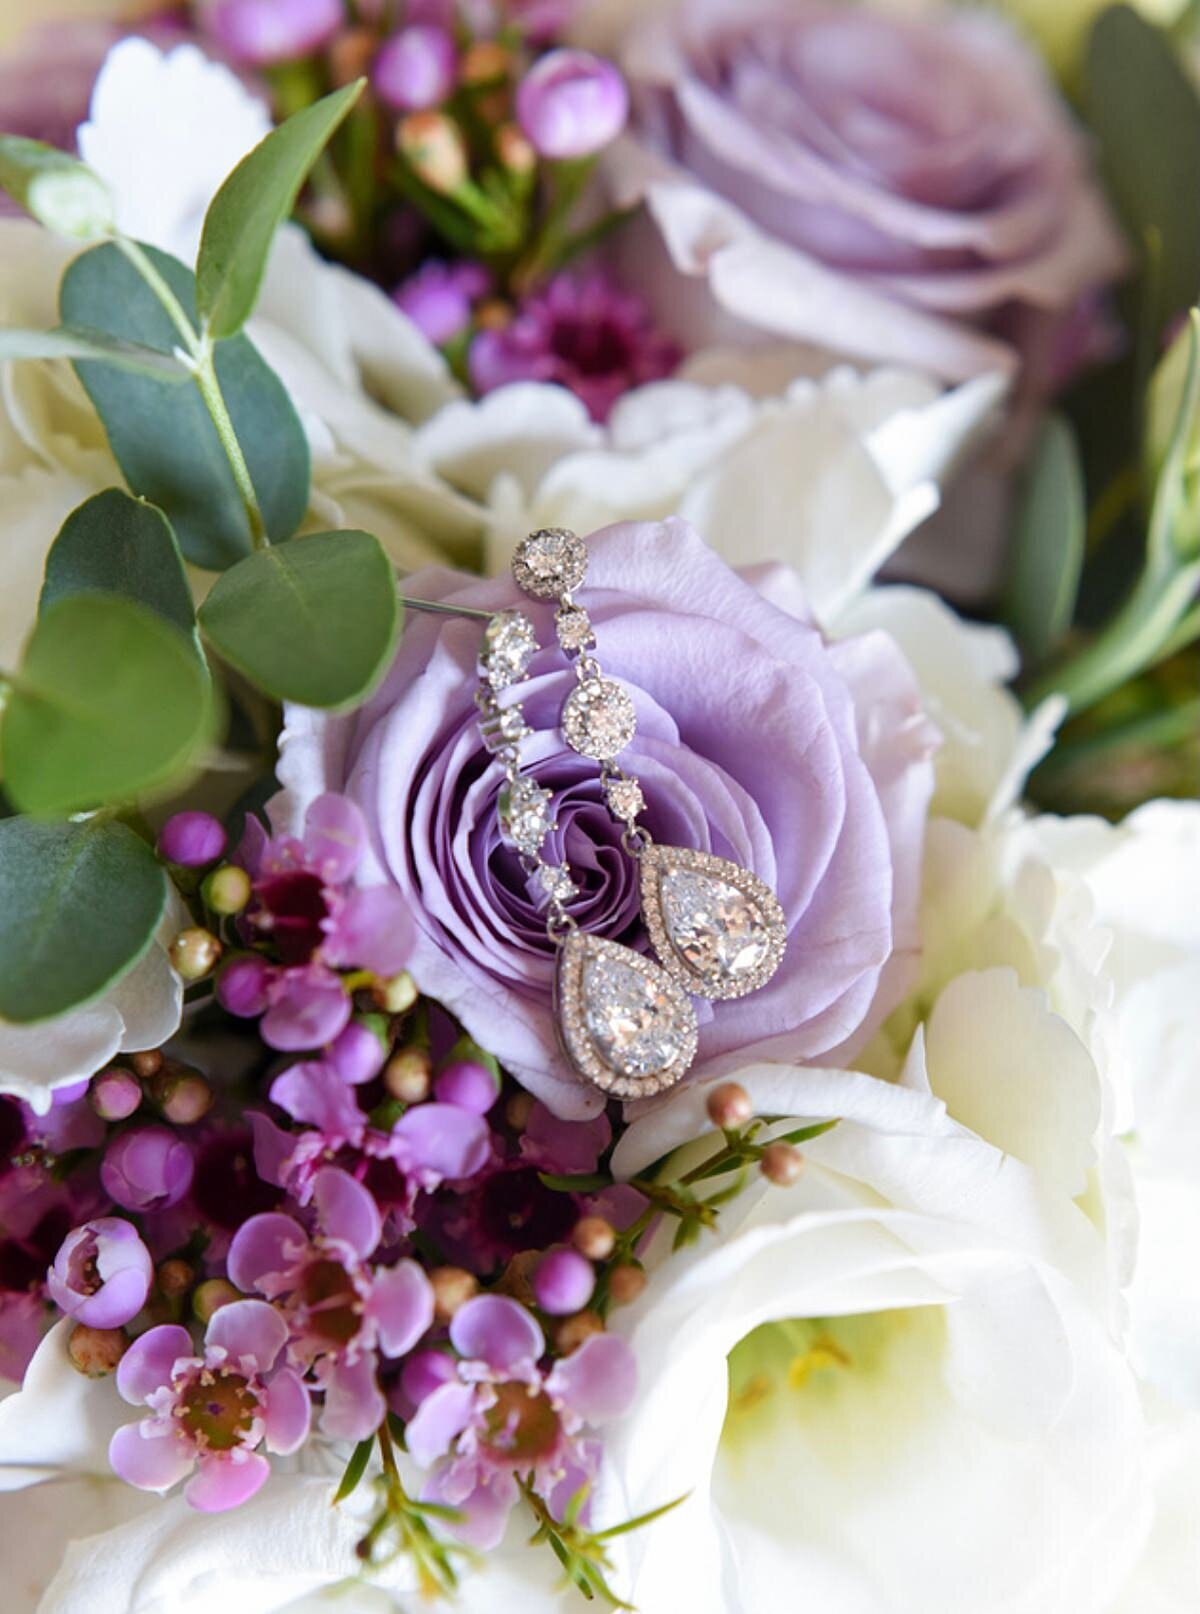 Dangling diamond earrings layingon top of a light purple rose  in a bridal bouquet of white hydrangea, eucalyptus and purple wax flower.